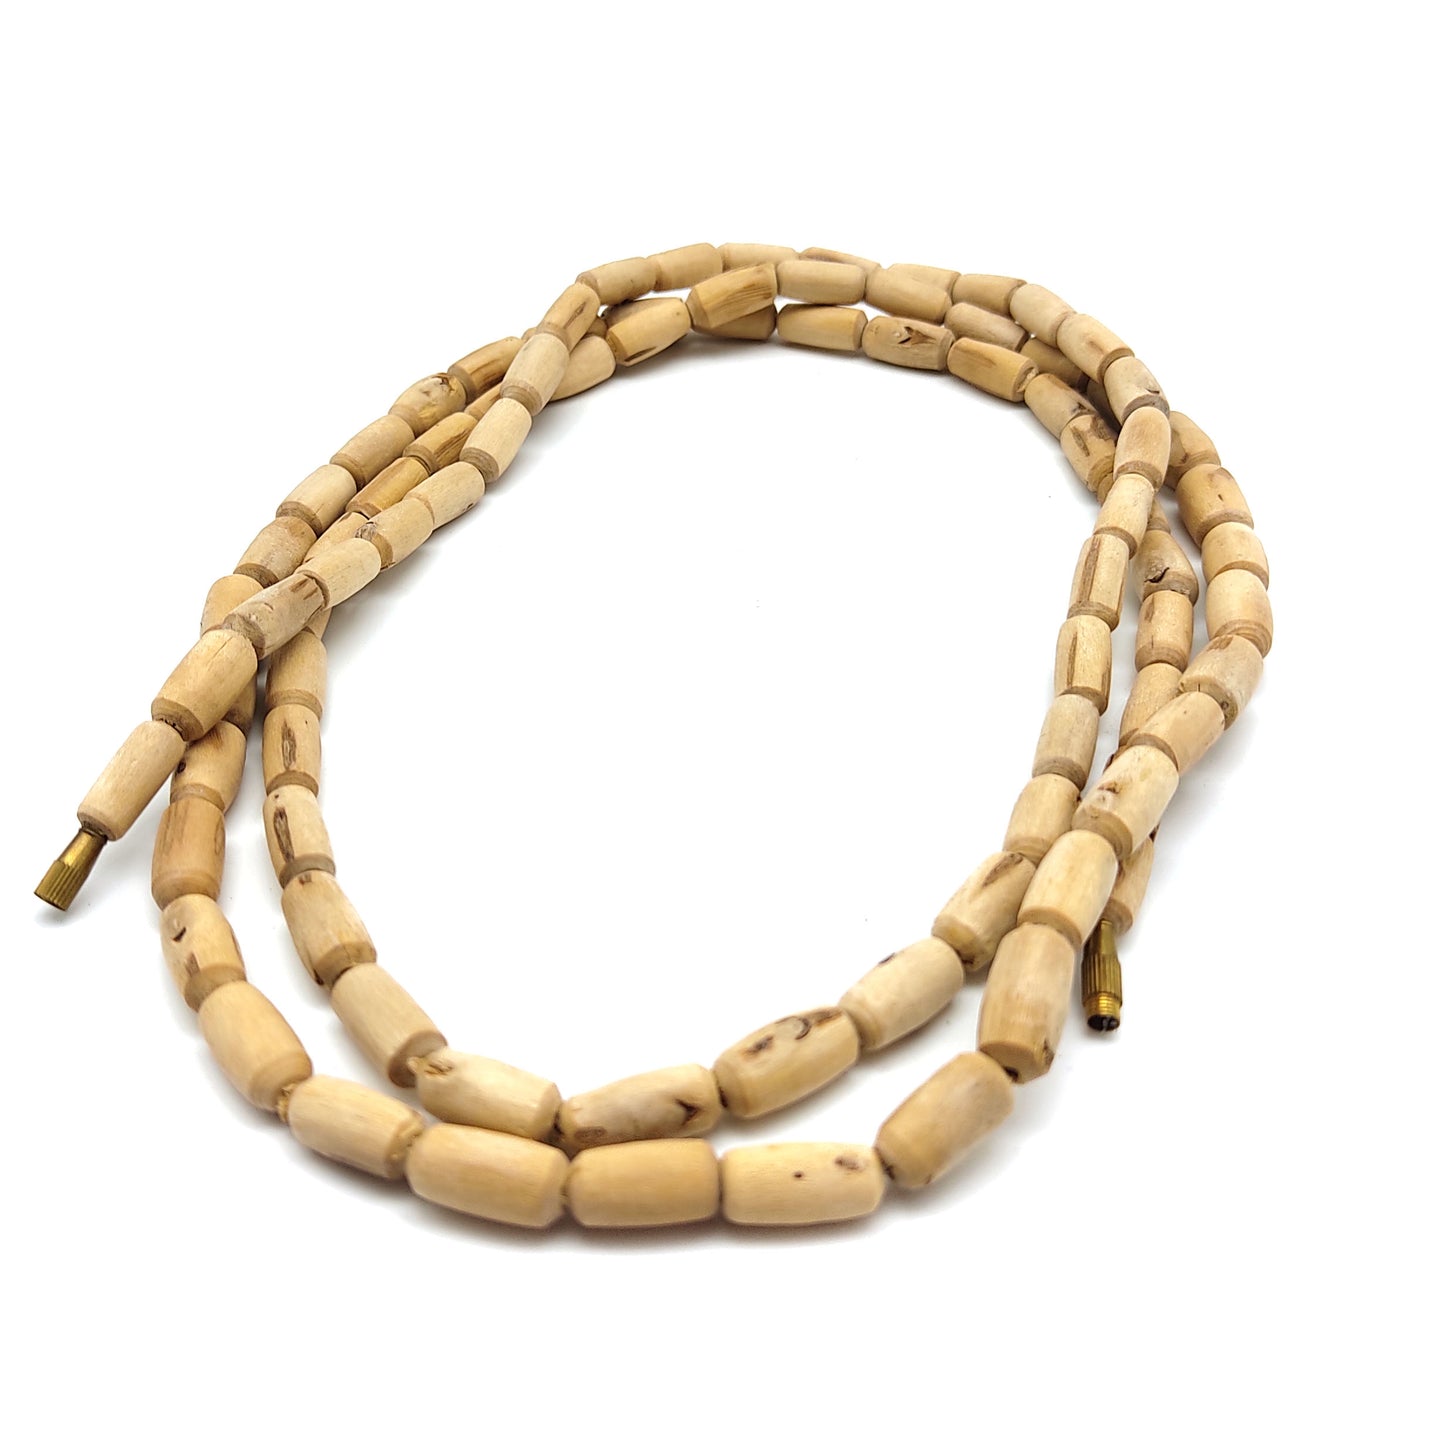 India Kunti Kanthi Tulasi Tulsi Handcrafted Holy Beads Necklace 100% Natural 49.5"